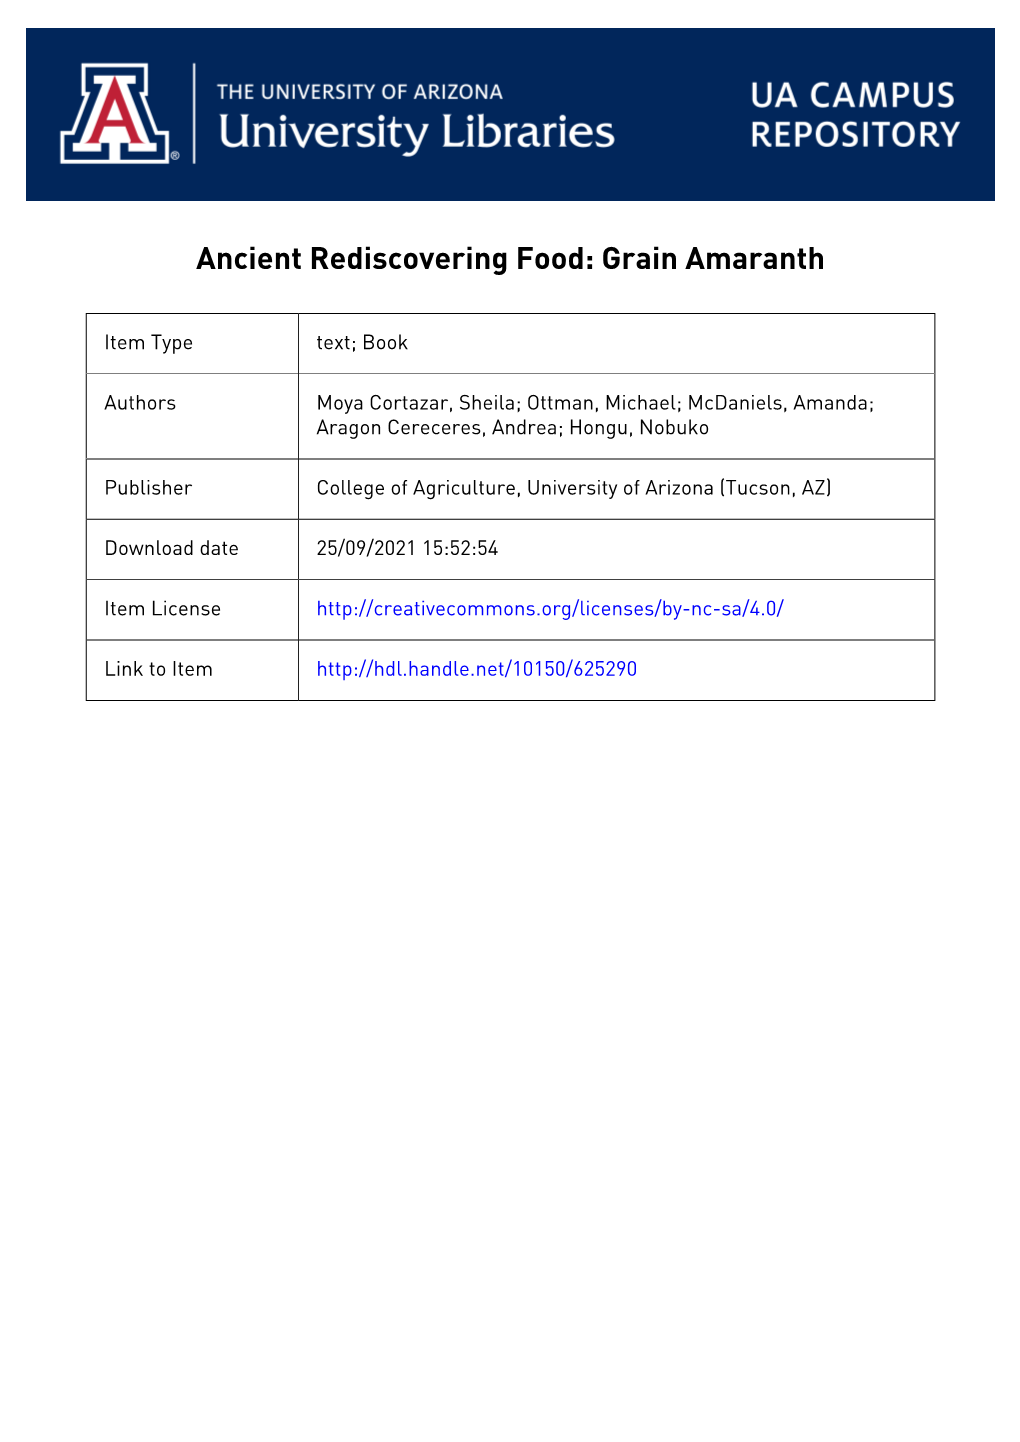 Ancient Rediscovering Food Grain Amaranth